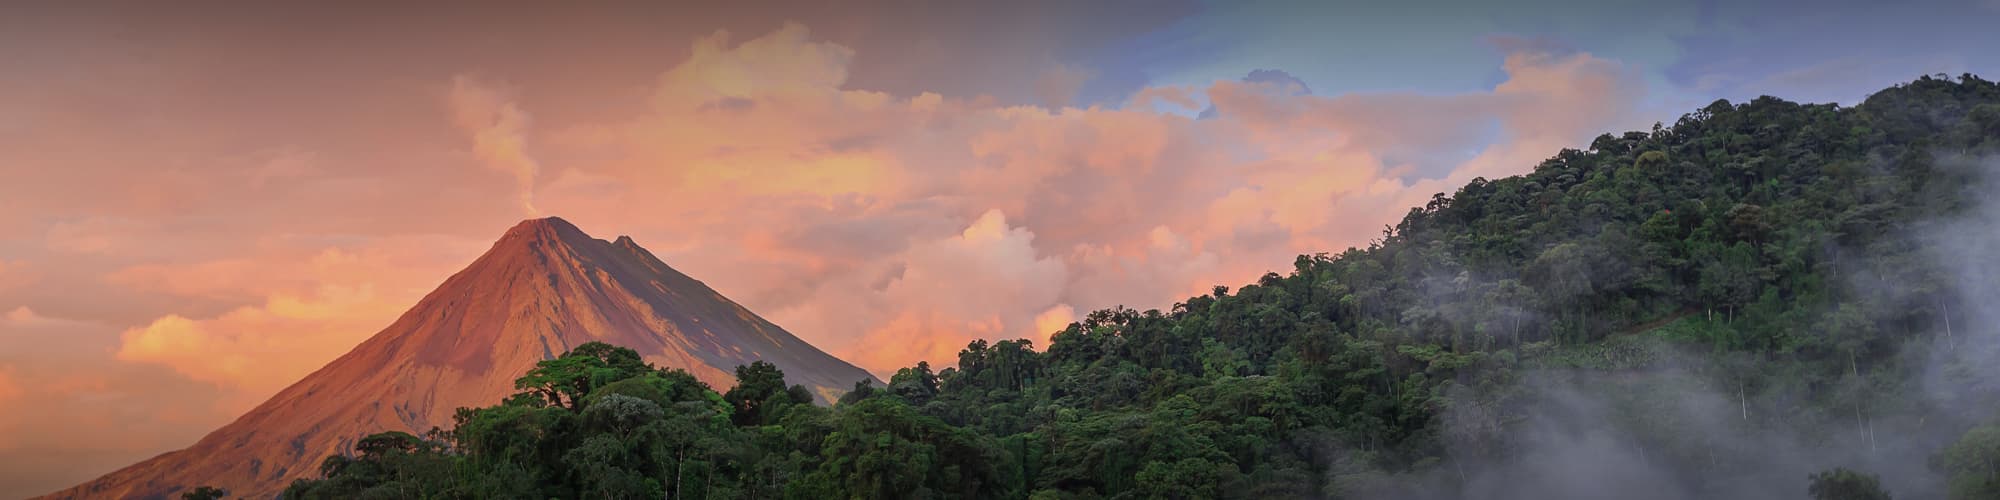 Découverte Costa Rica © photodiscoveries / Adobe Stock